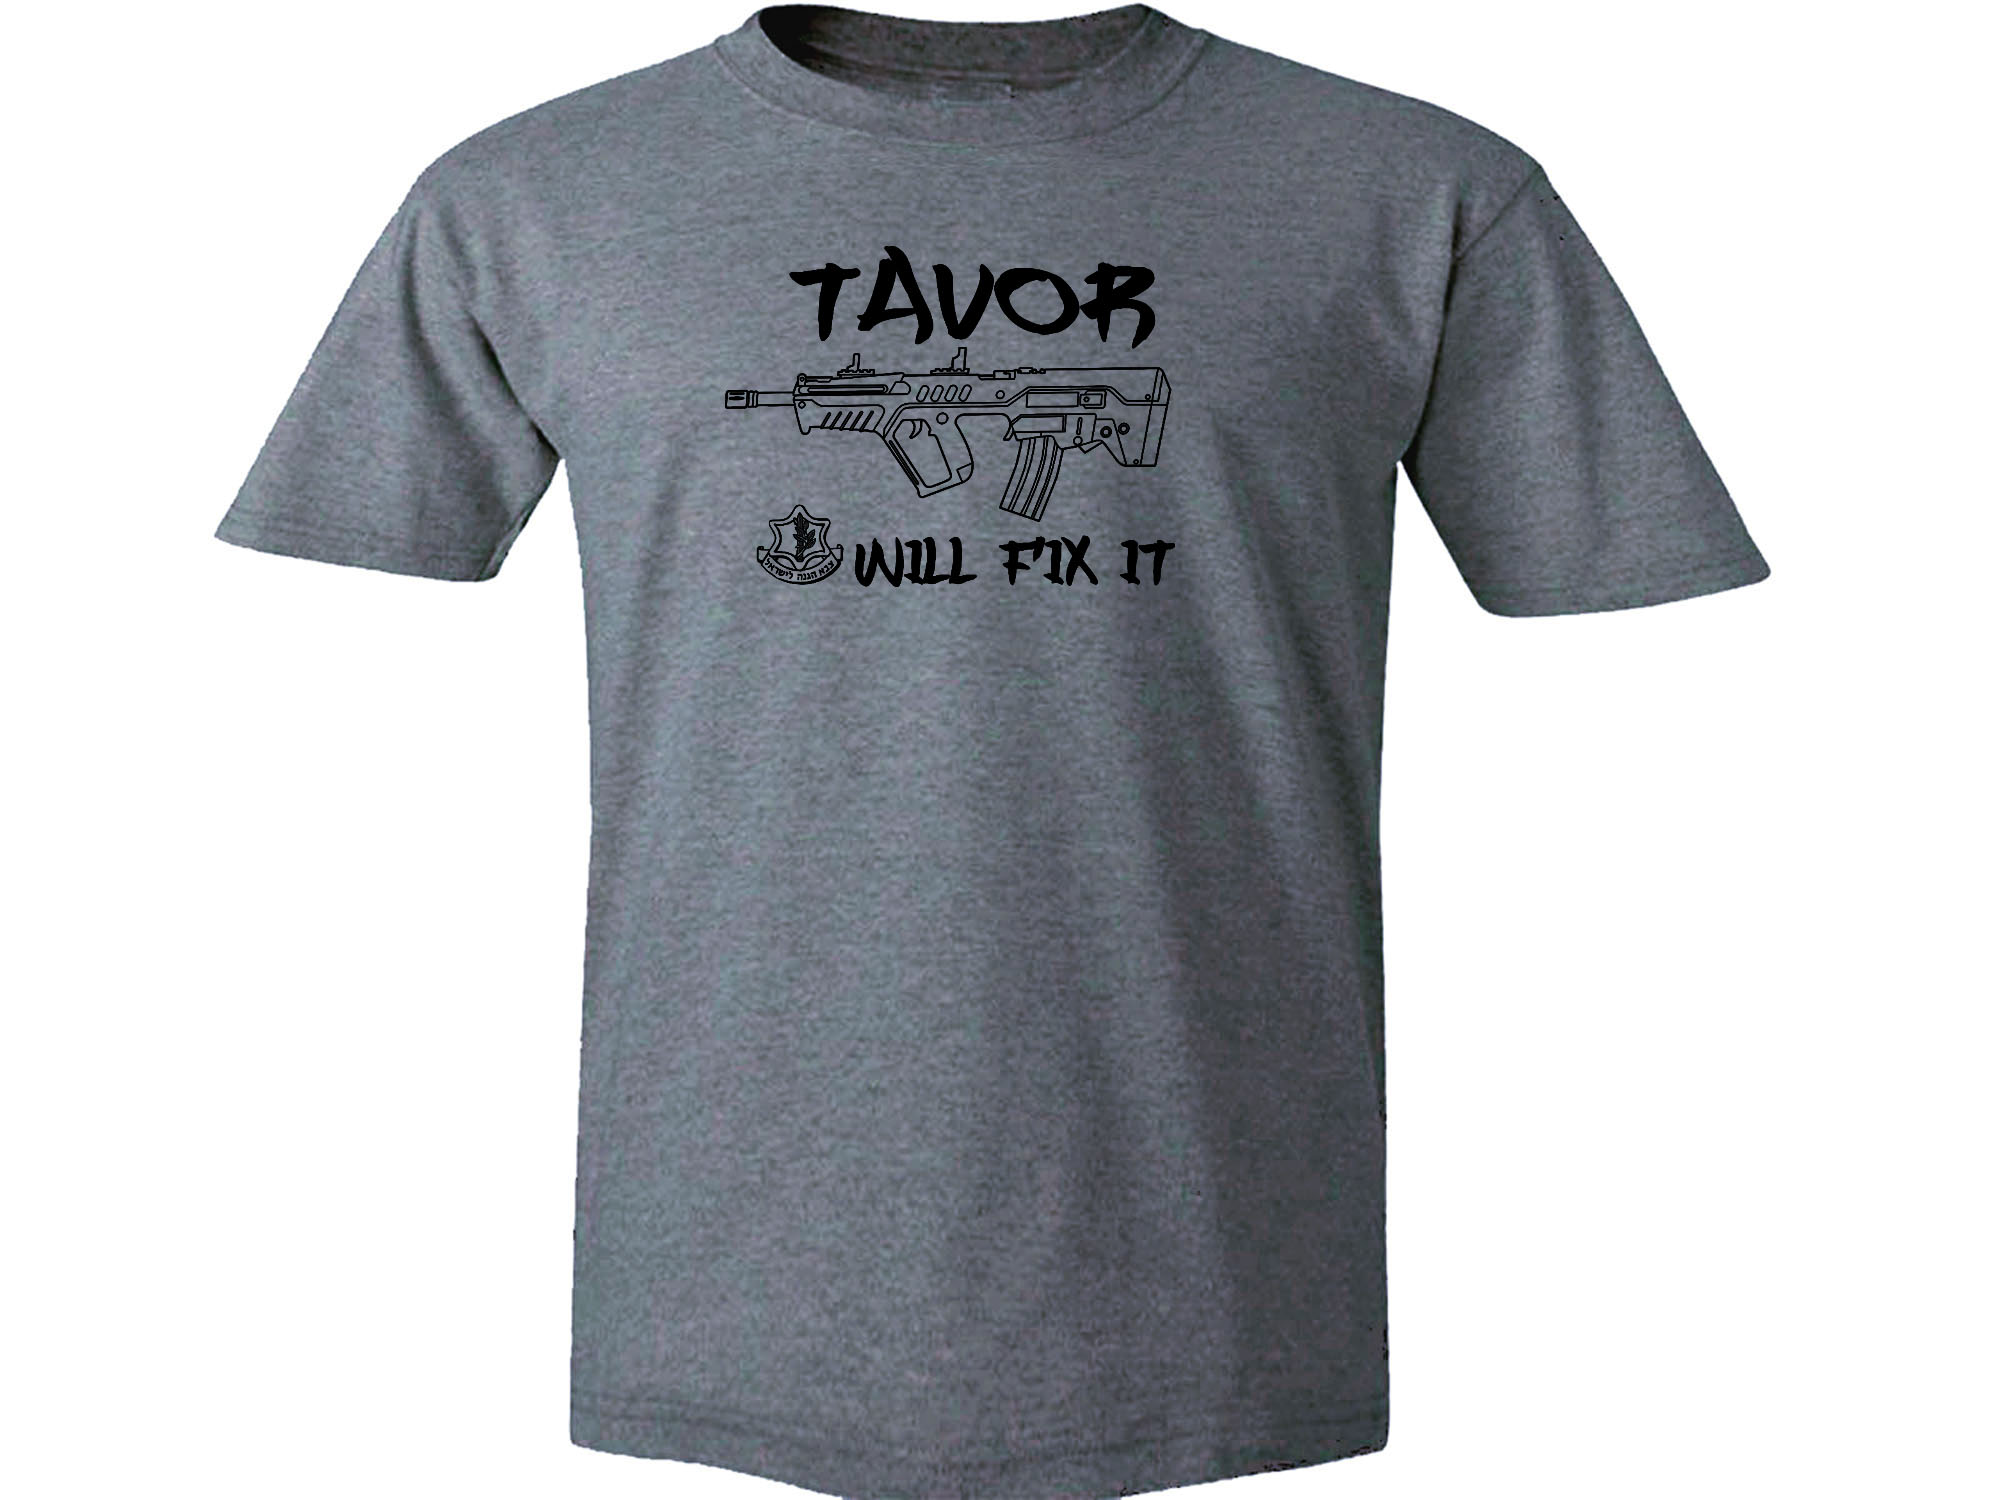 Tavor Gun Machine Israel Army Patriotic gray T-Shirt